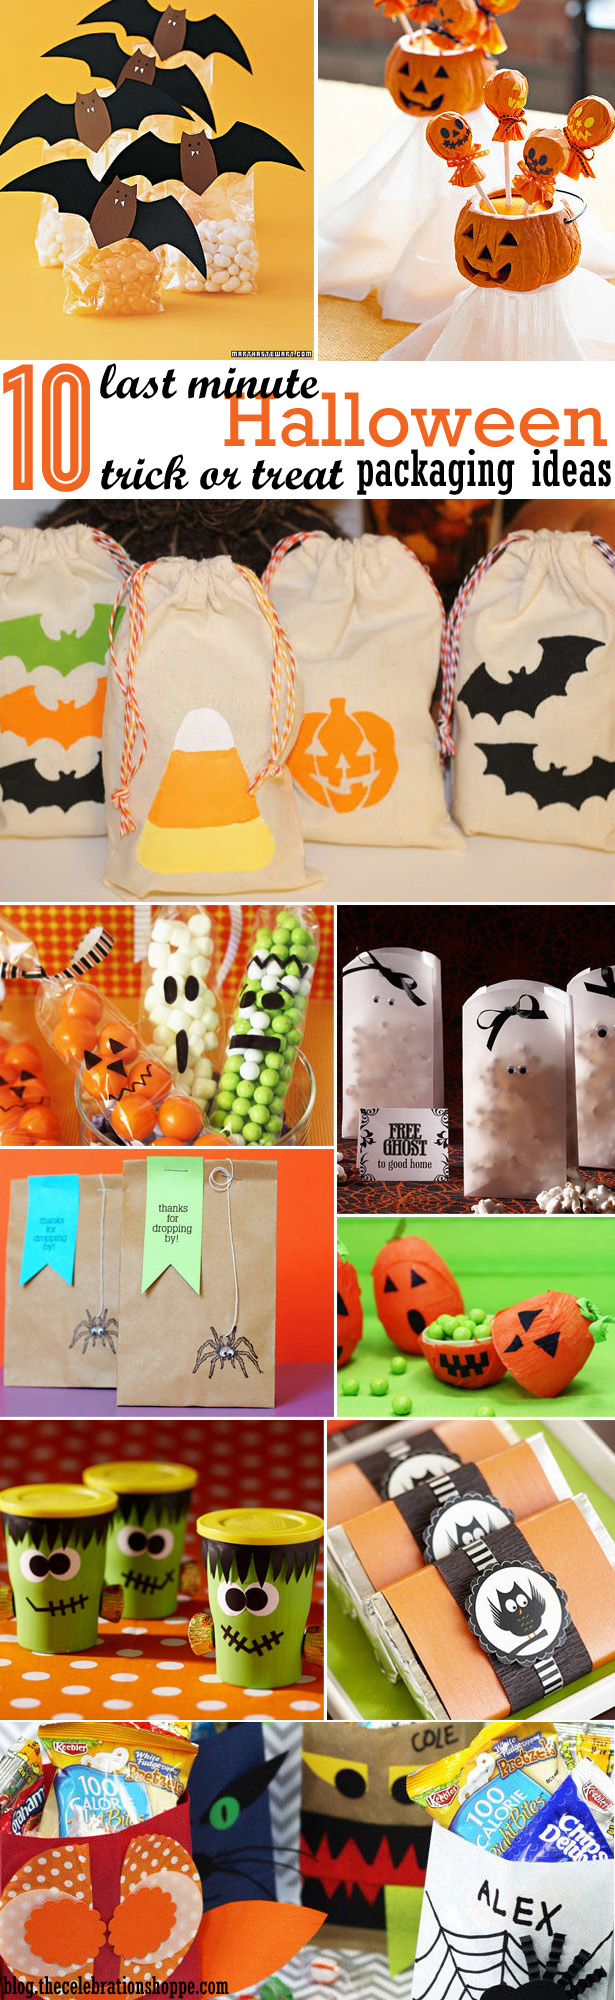 10 Last Minute Halloween Trick-or-Treat Packaging Ideas | Kim Byers